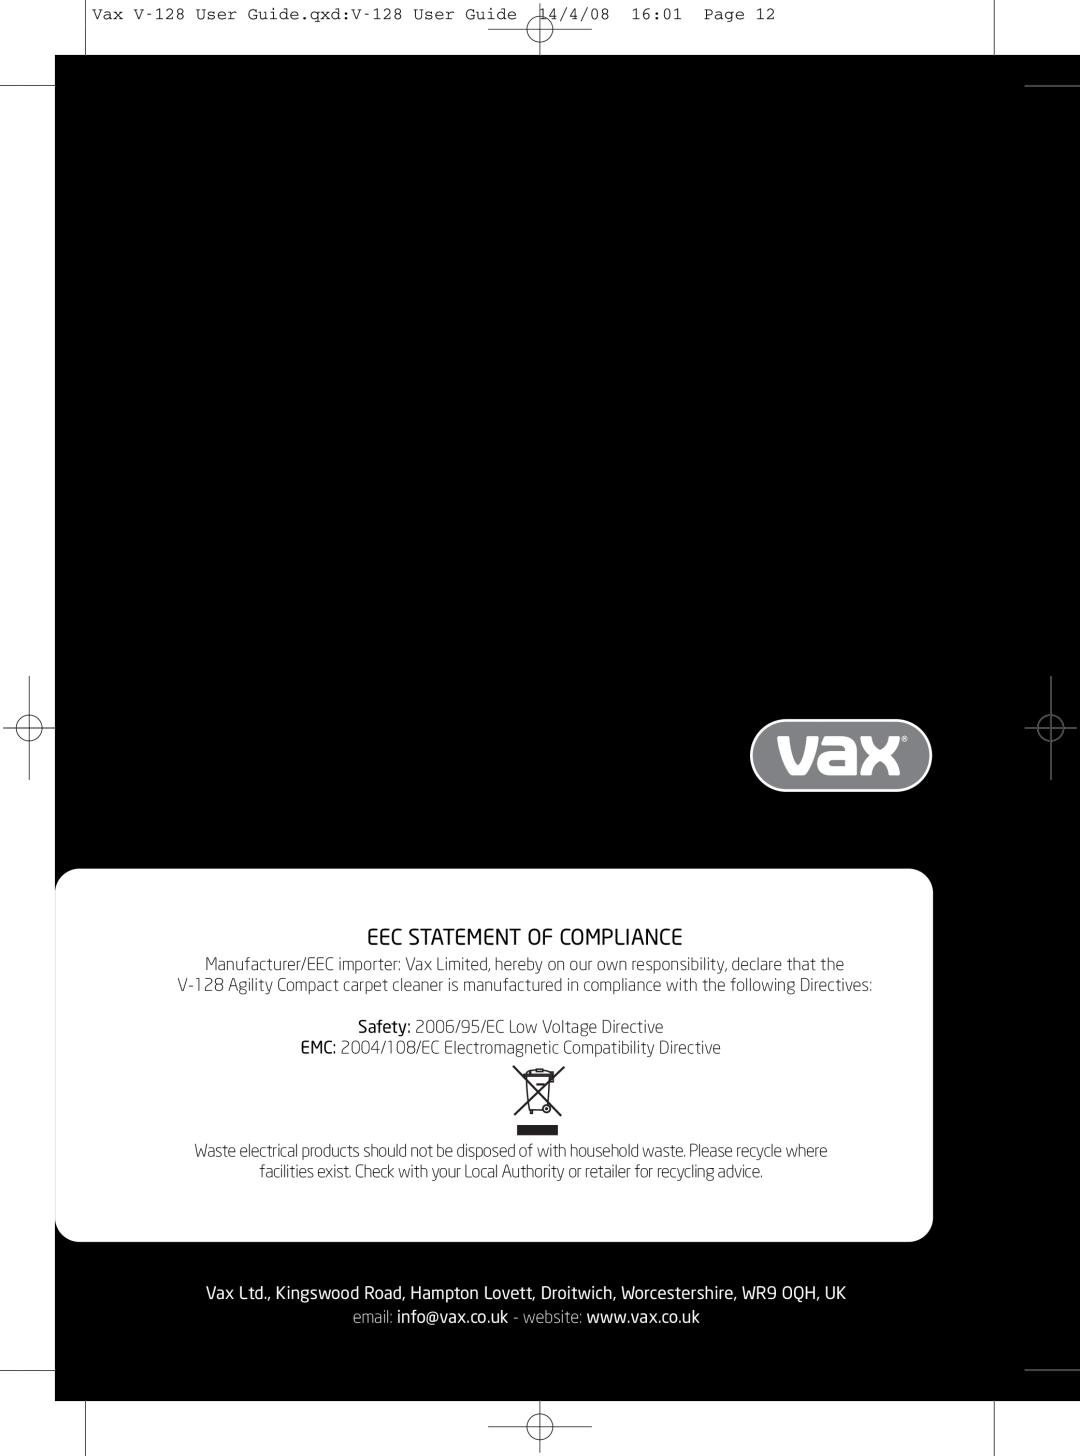 Vizio V-128 instruction manual Eec Statement Of Compliance 